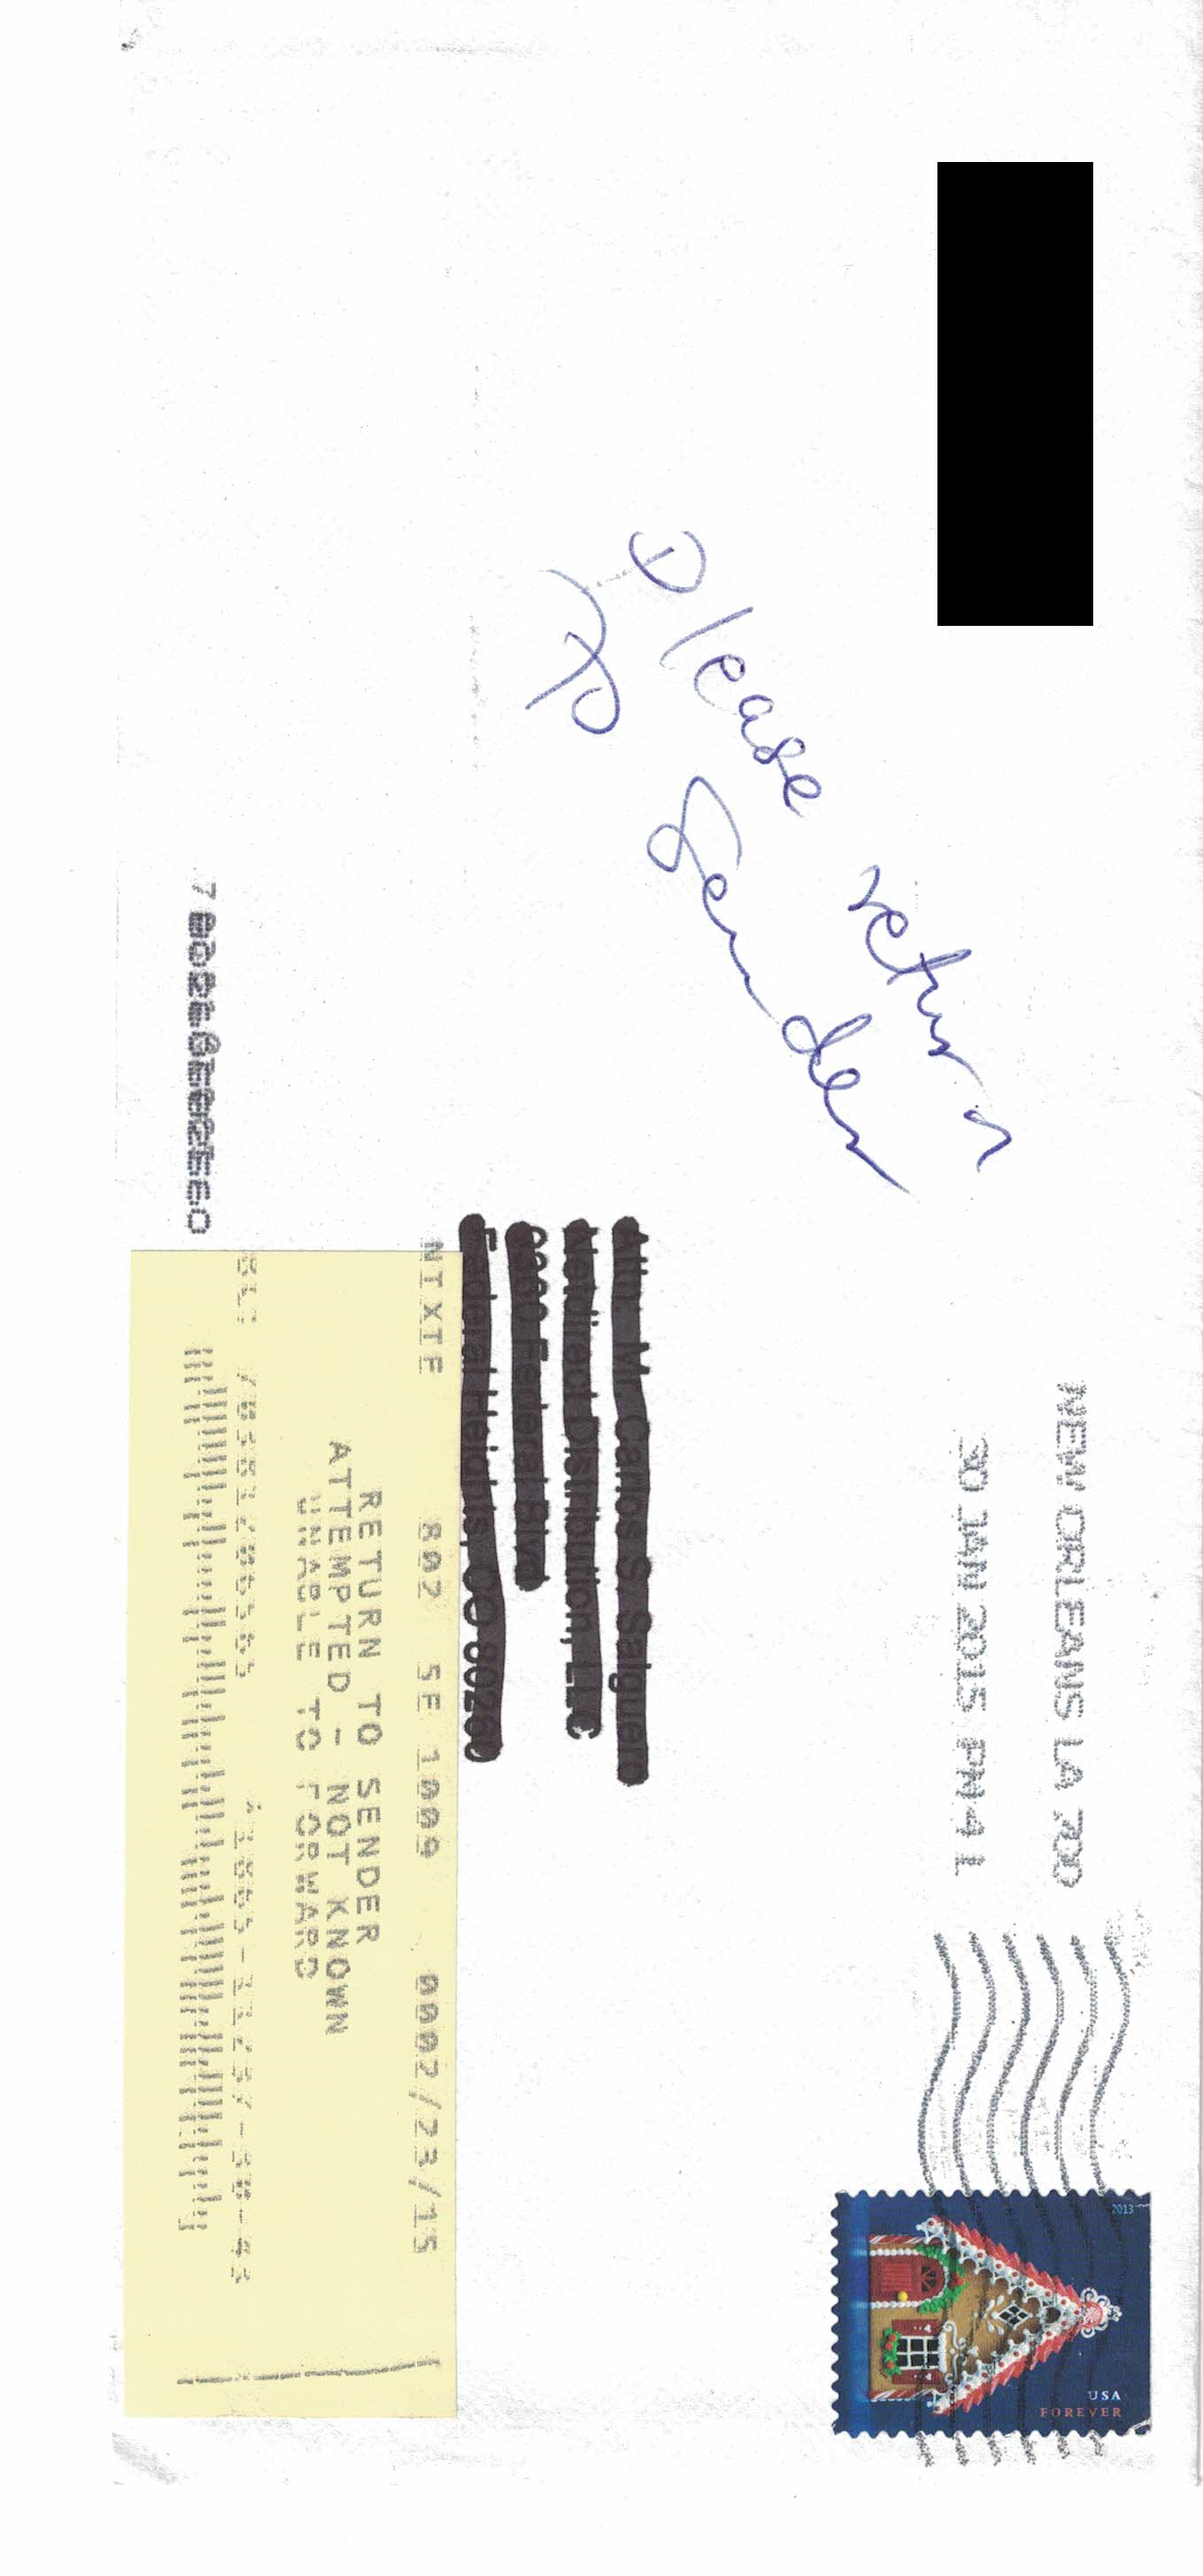 Envelope of returned letter sent to Netdirect Distribution, LLC (netdirectsales).